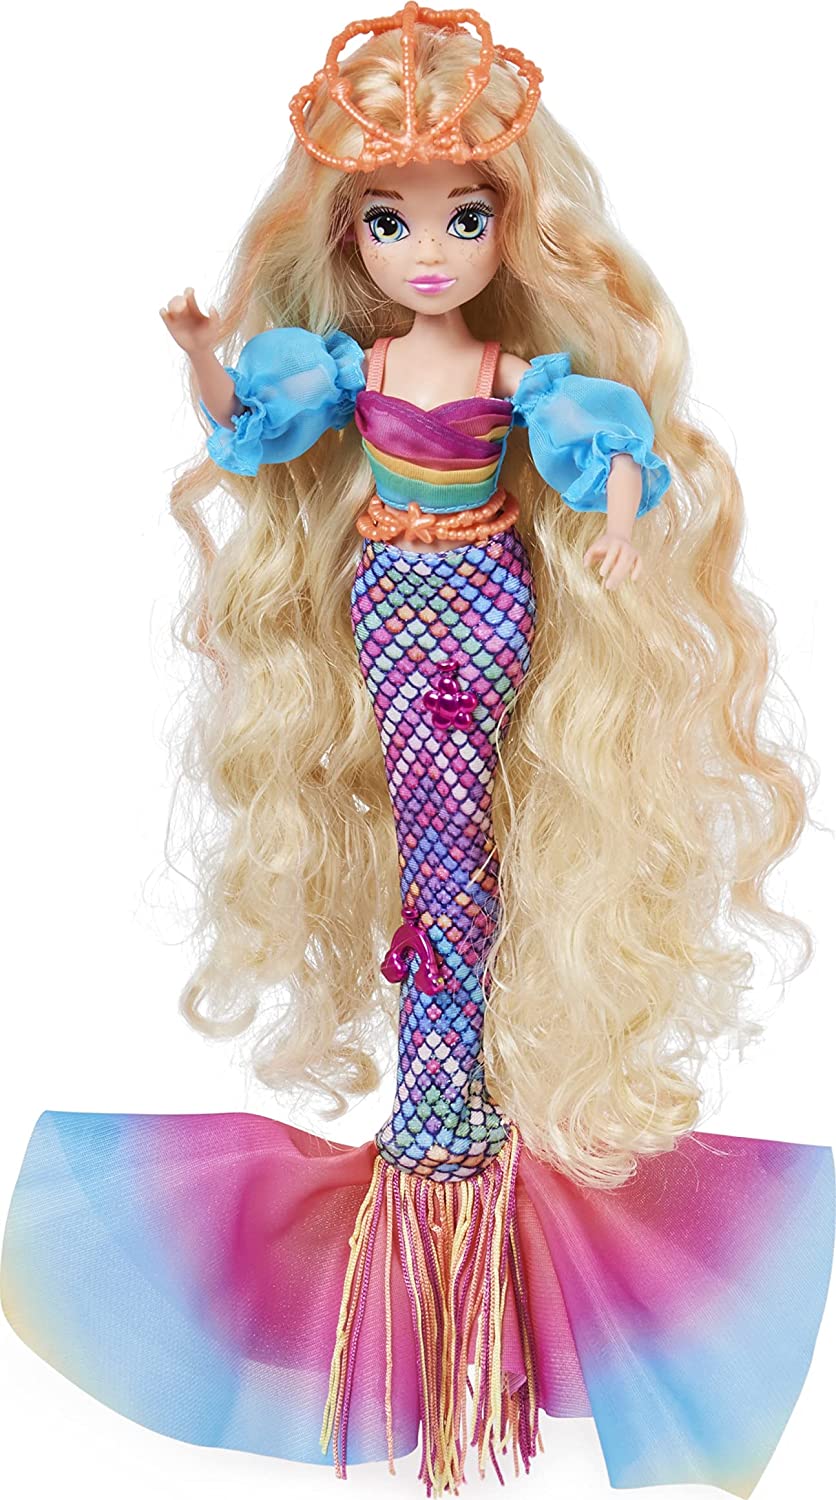 Mermaid High Finly doll